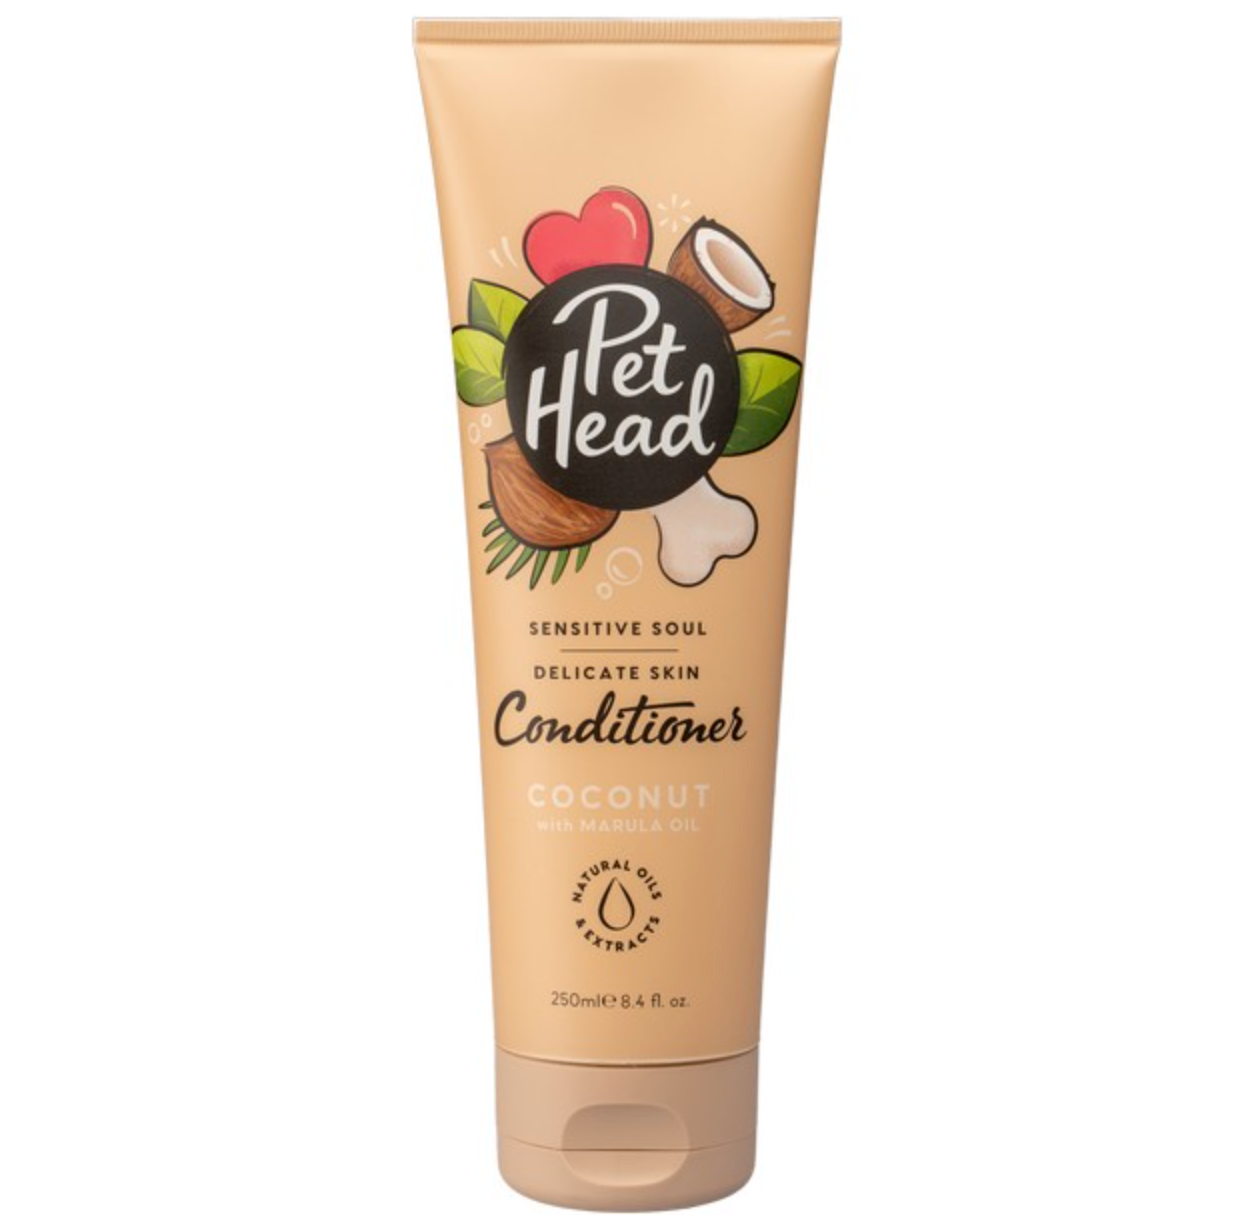 Pet Head Sensitive Skin Coconut Conditioner (250ml)